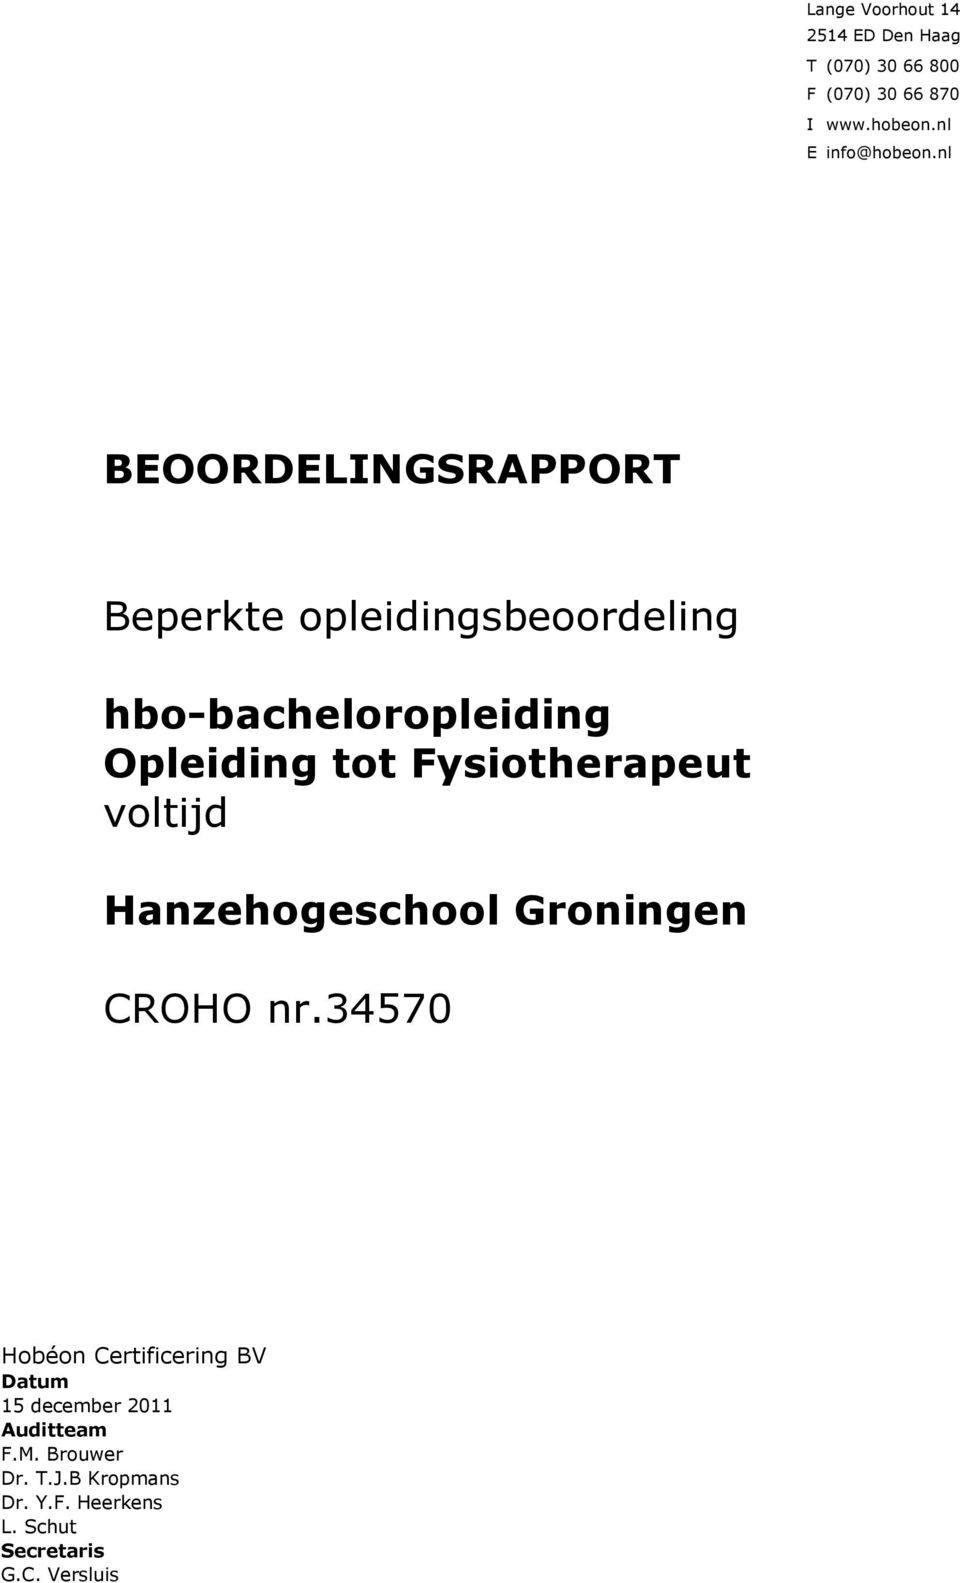 nl BERDELINGSRAPPRT Beperkte opleidingsbeoordeling hbo-bacheloropleiding pleiding tot